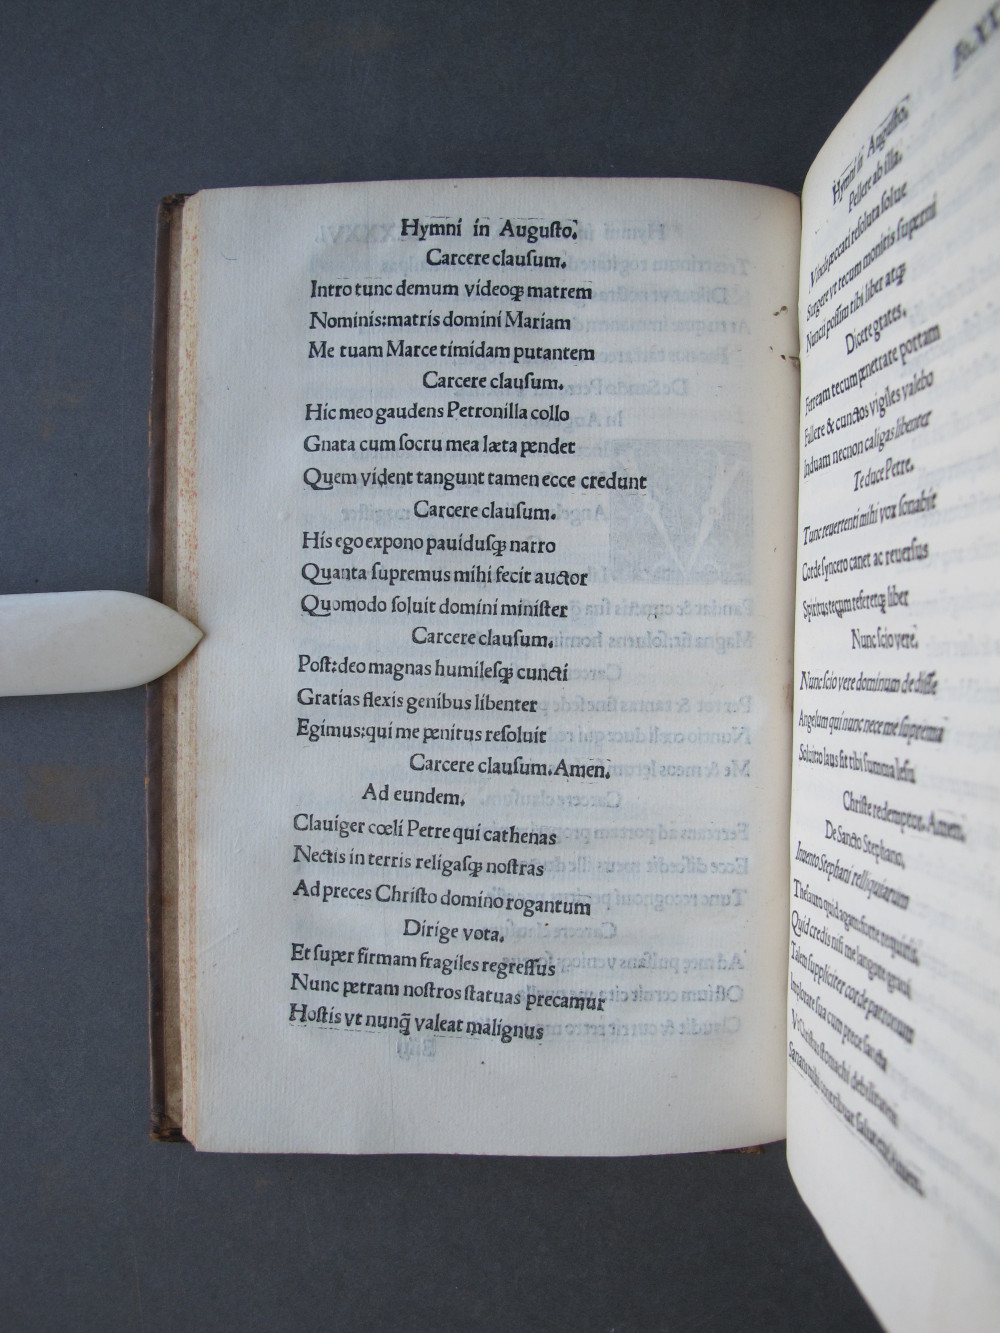 Folio 36 verso